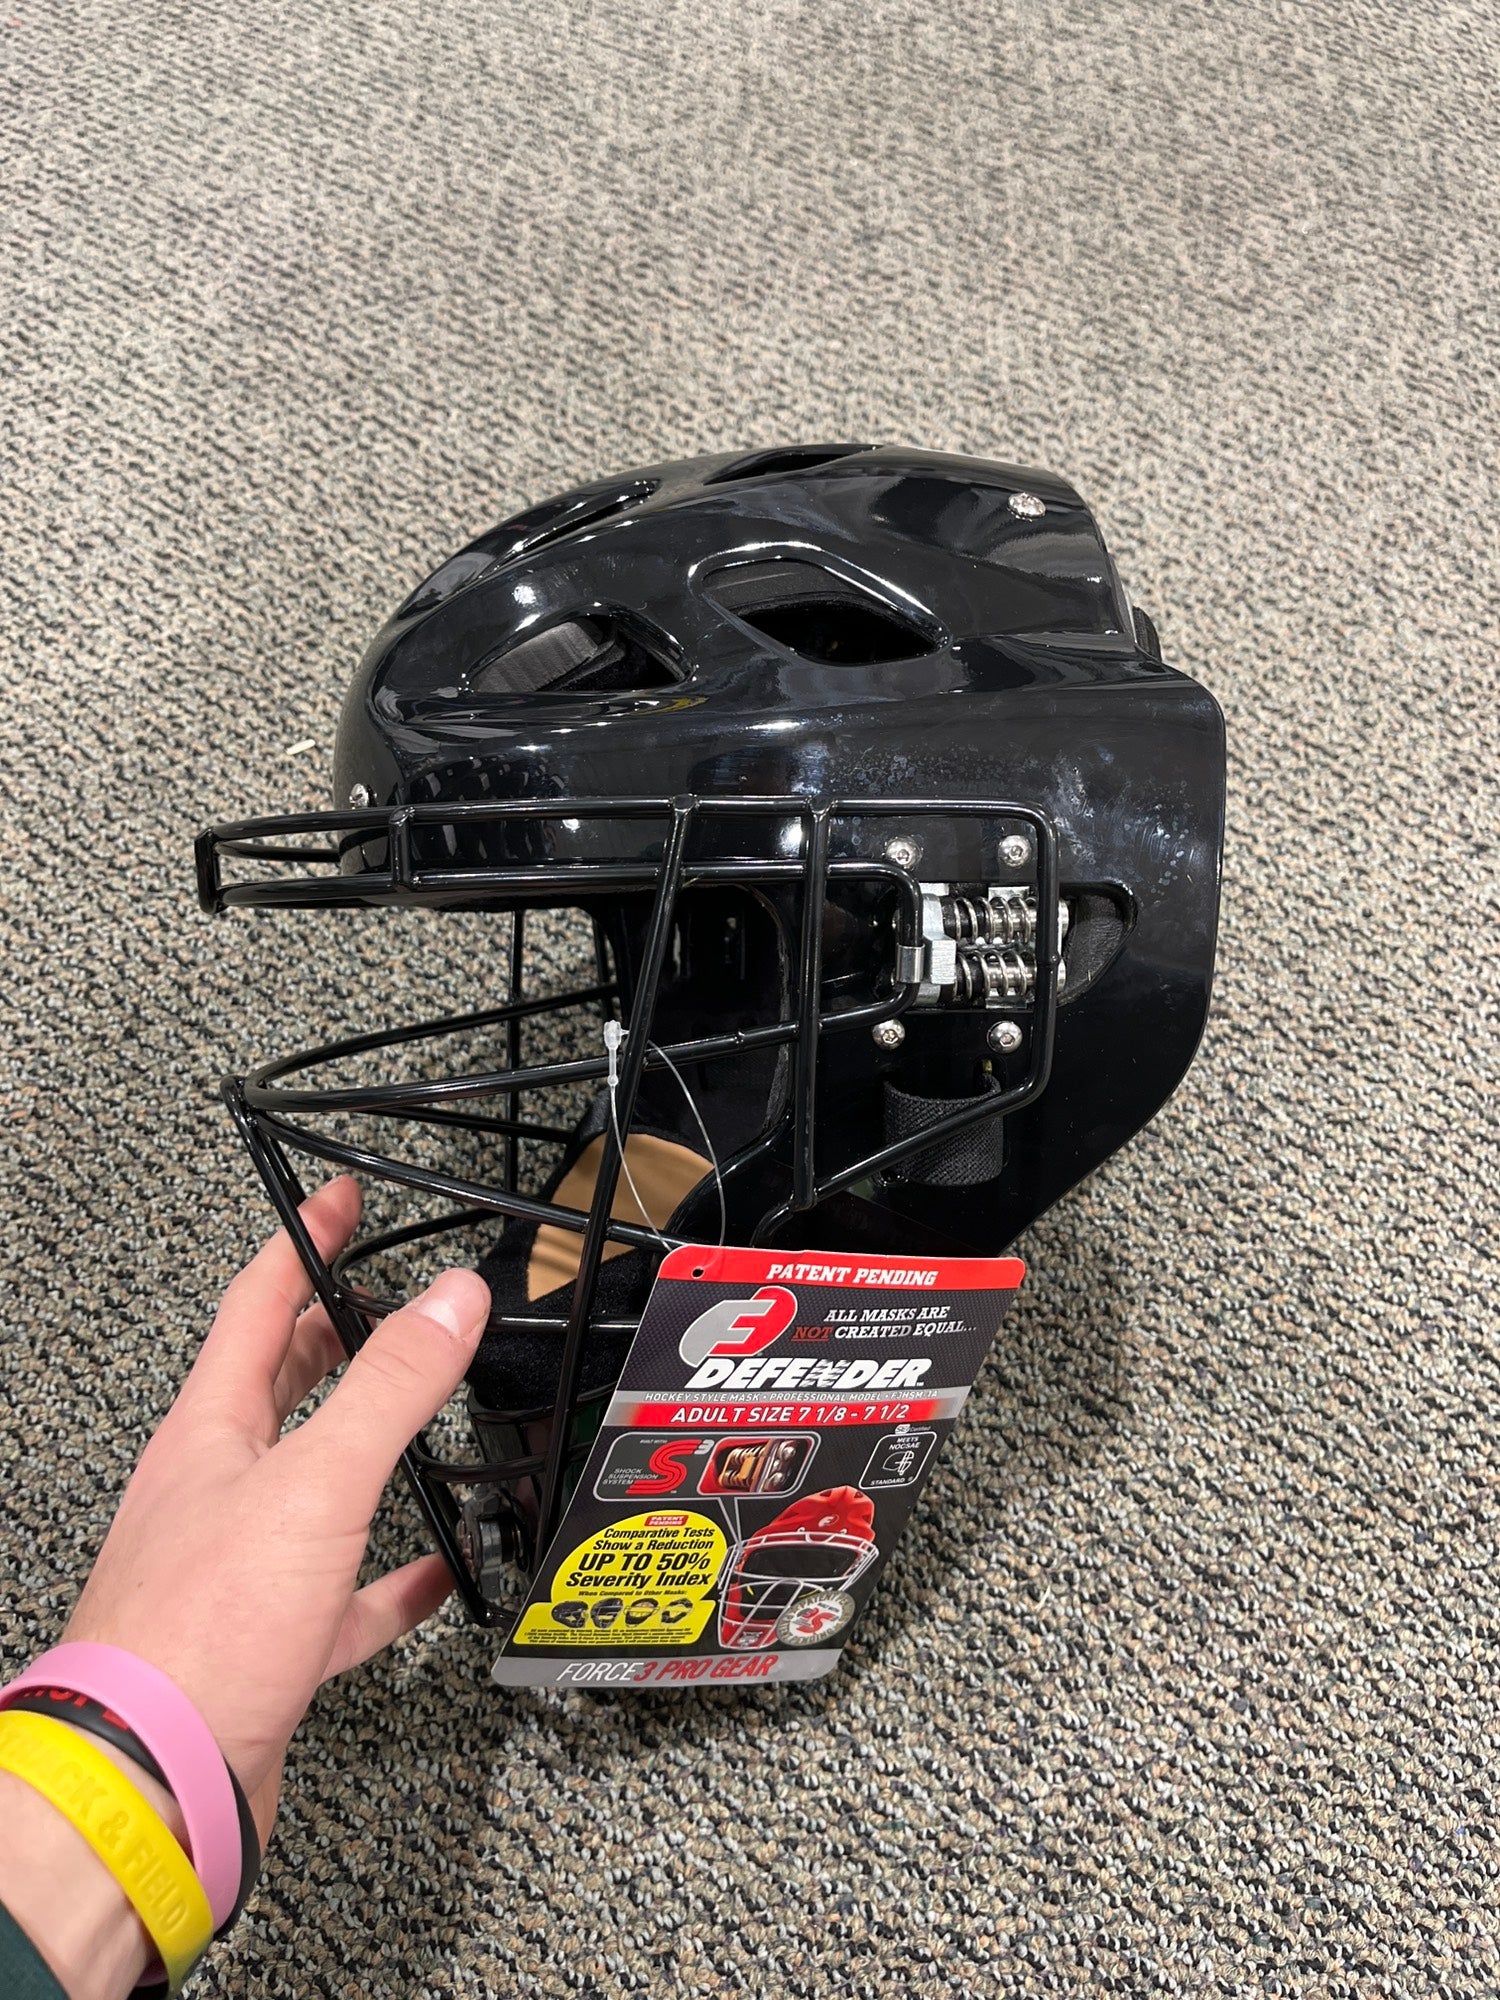 Baseball Masks, Hockey Style Catchers Mask - Force3 Pro Gear